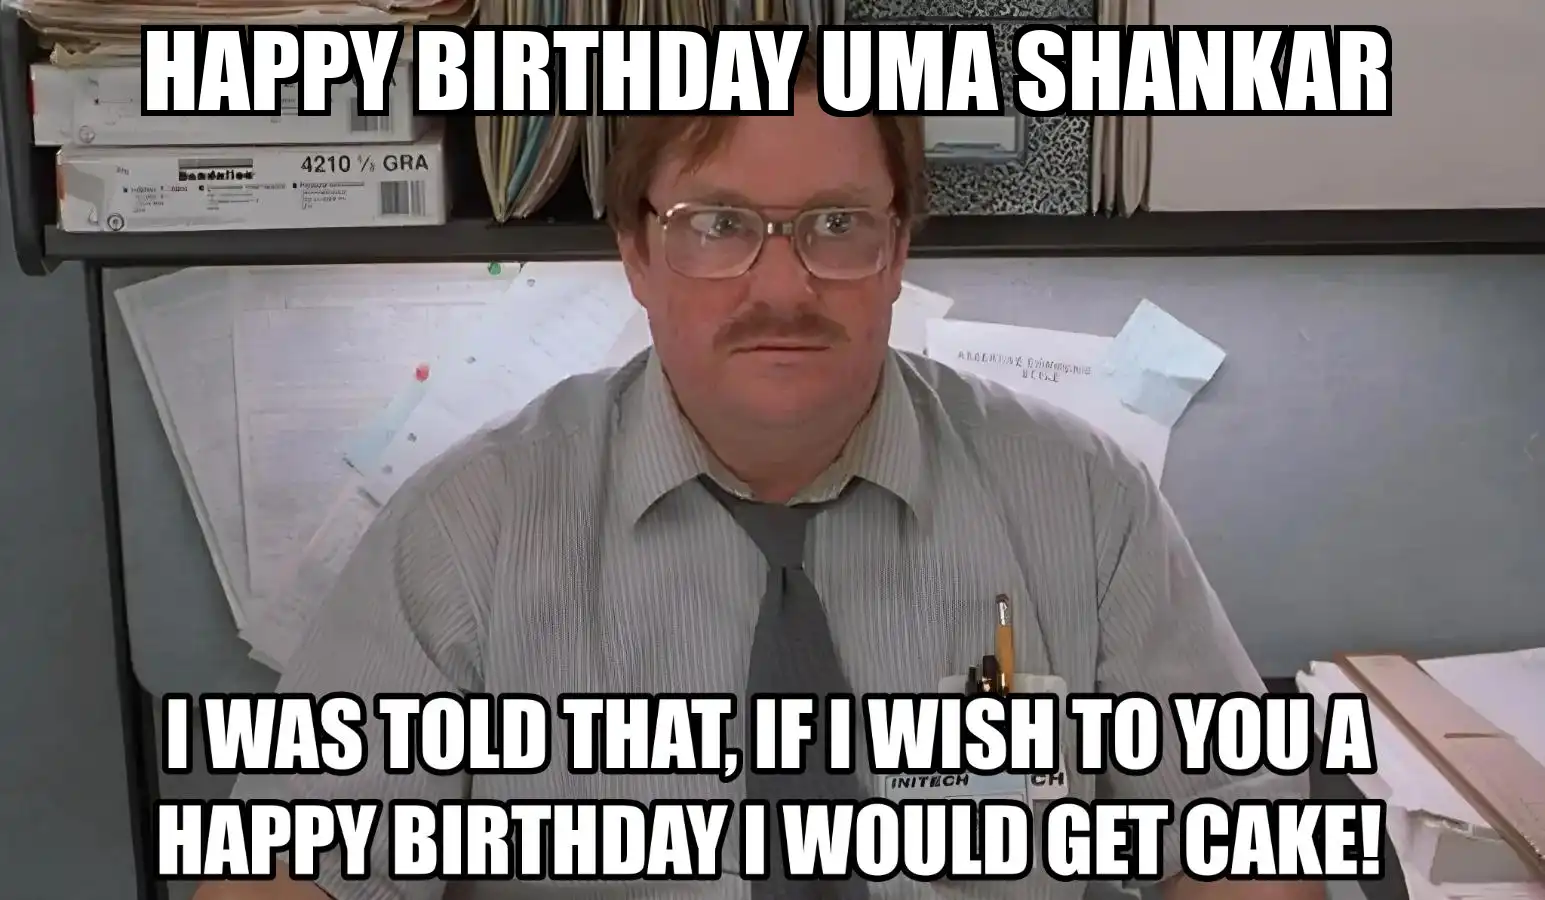 Happy Birthday Uma shankar I Would Get A Cake Meme